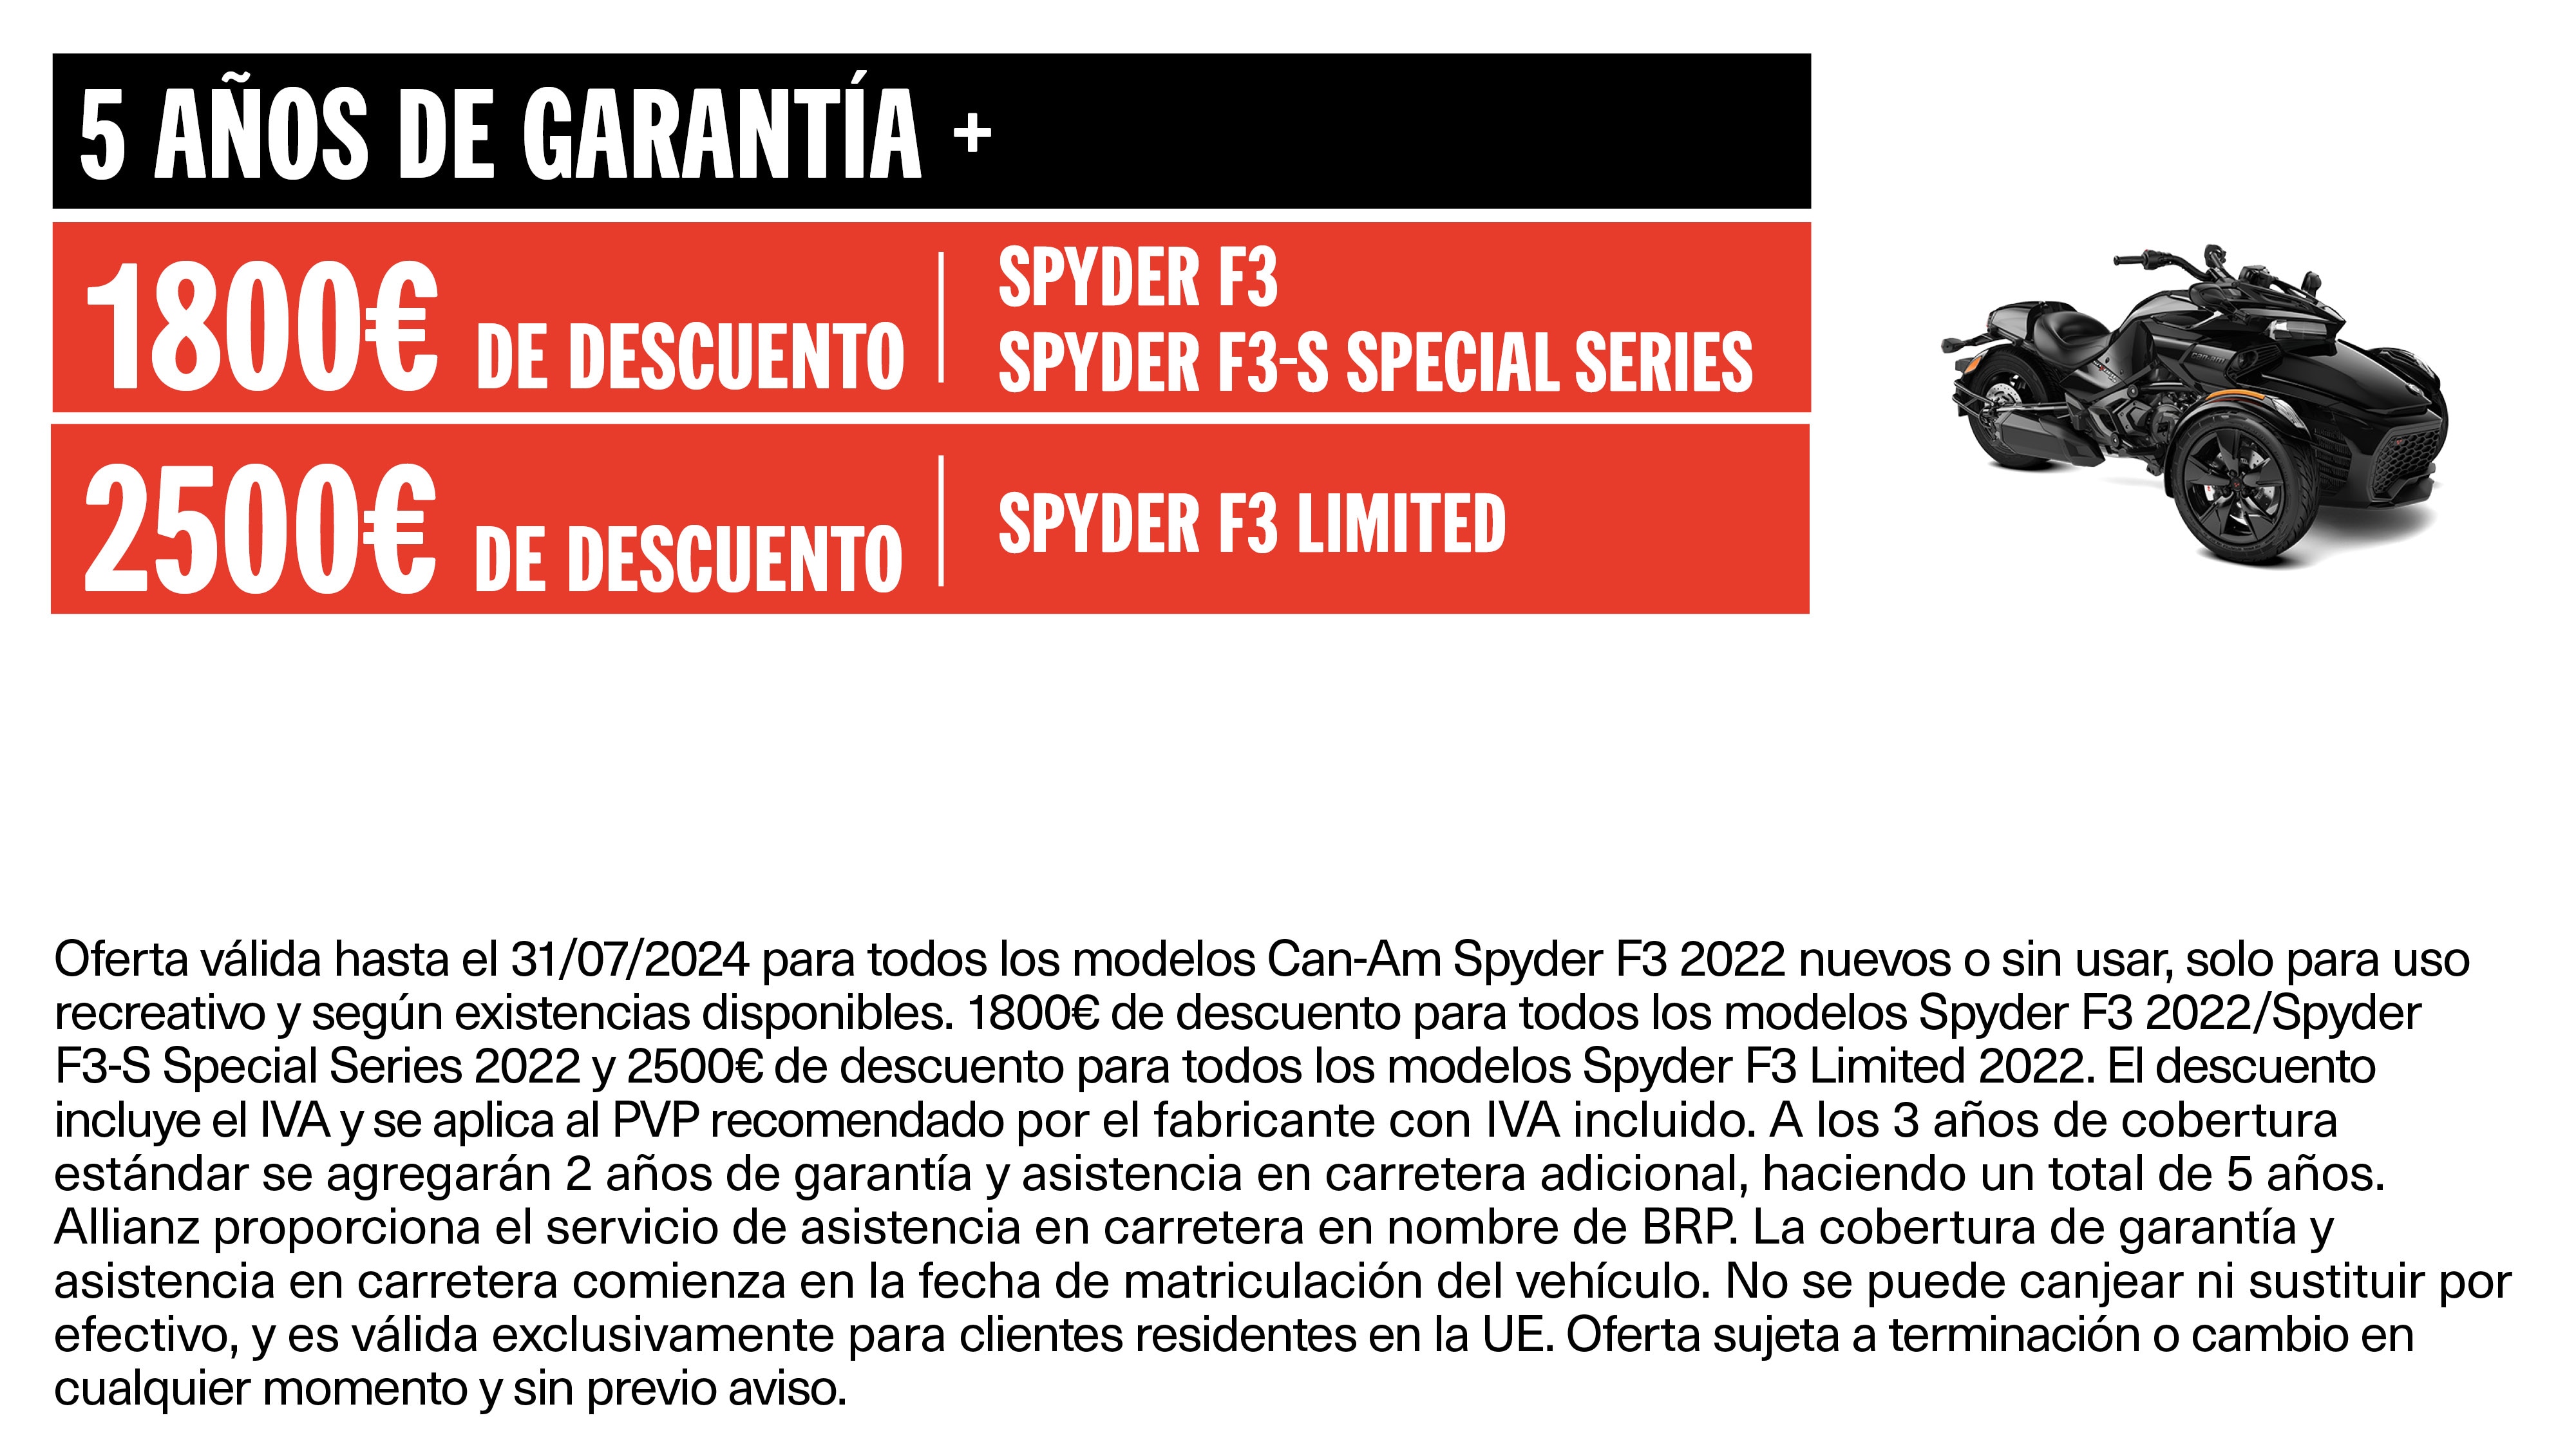 Can-Am Spyder F3 2022